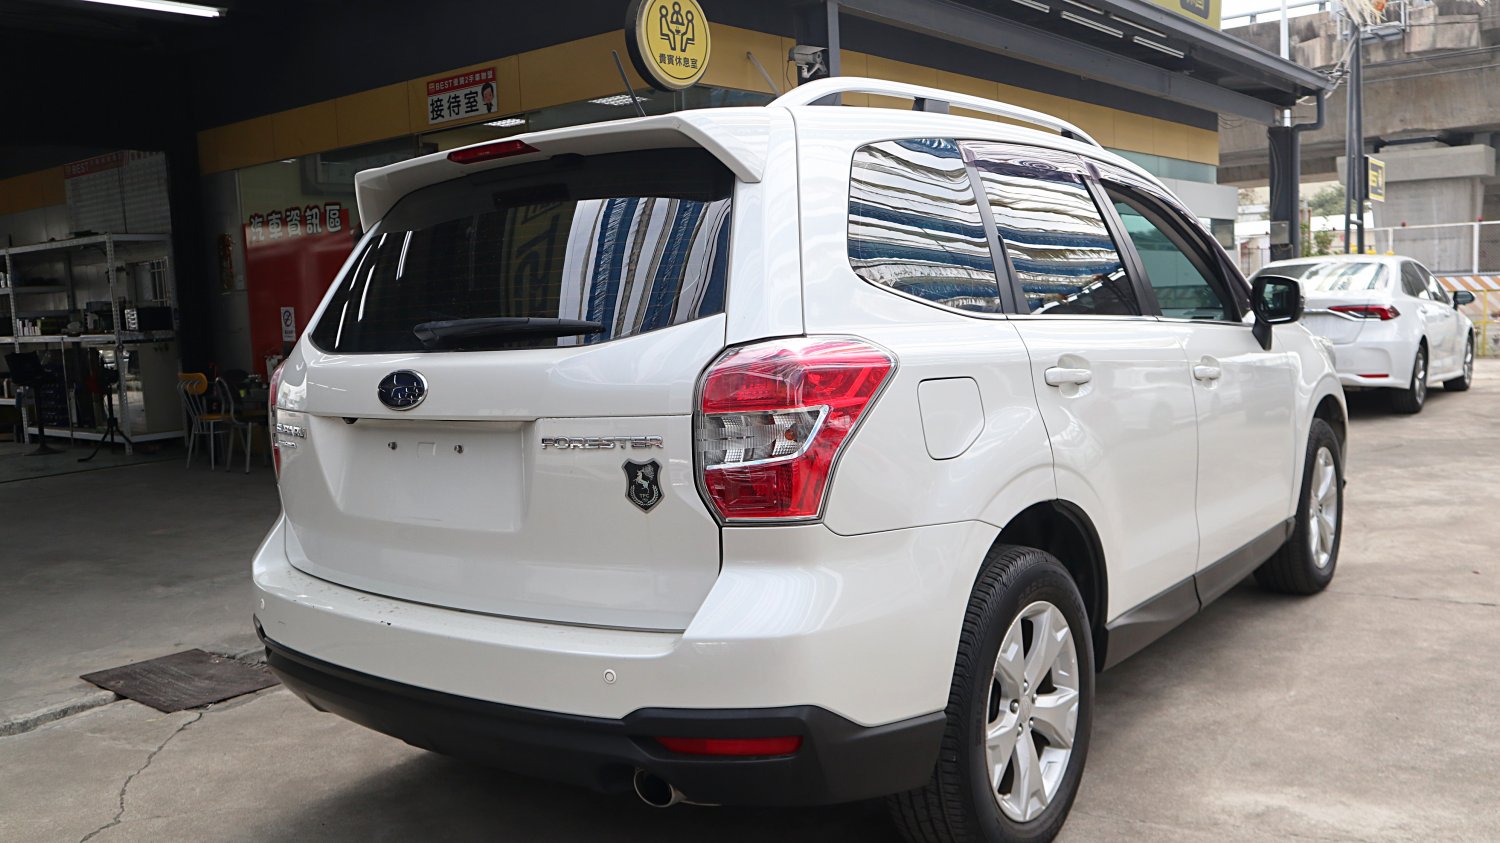 Subaru 速霸陸 ／ Forester ／ 2013年 ／ 2013年 Subaru Forester 白色 速霸陸中古休旅車 ／ 九州欣旺汽車 (台南)